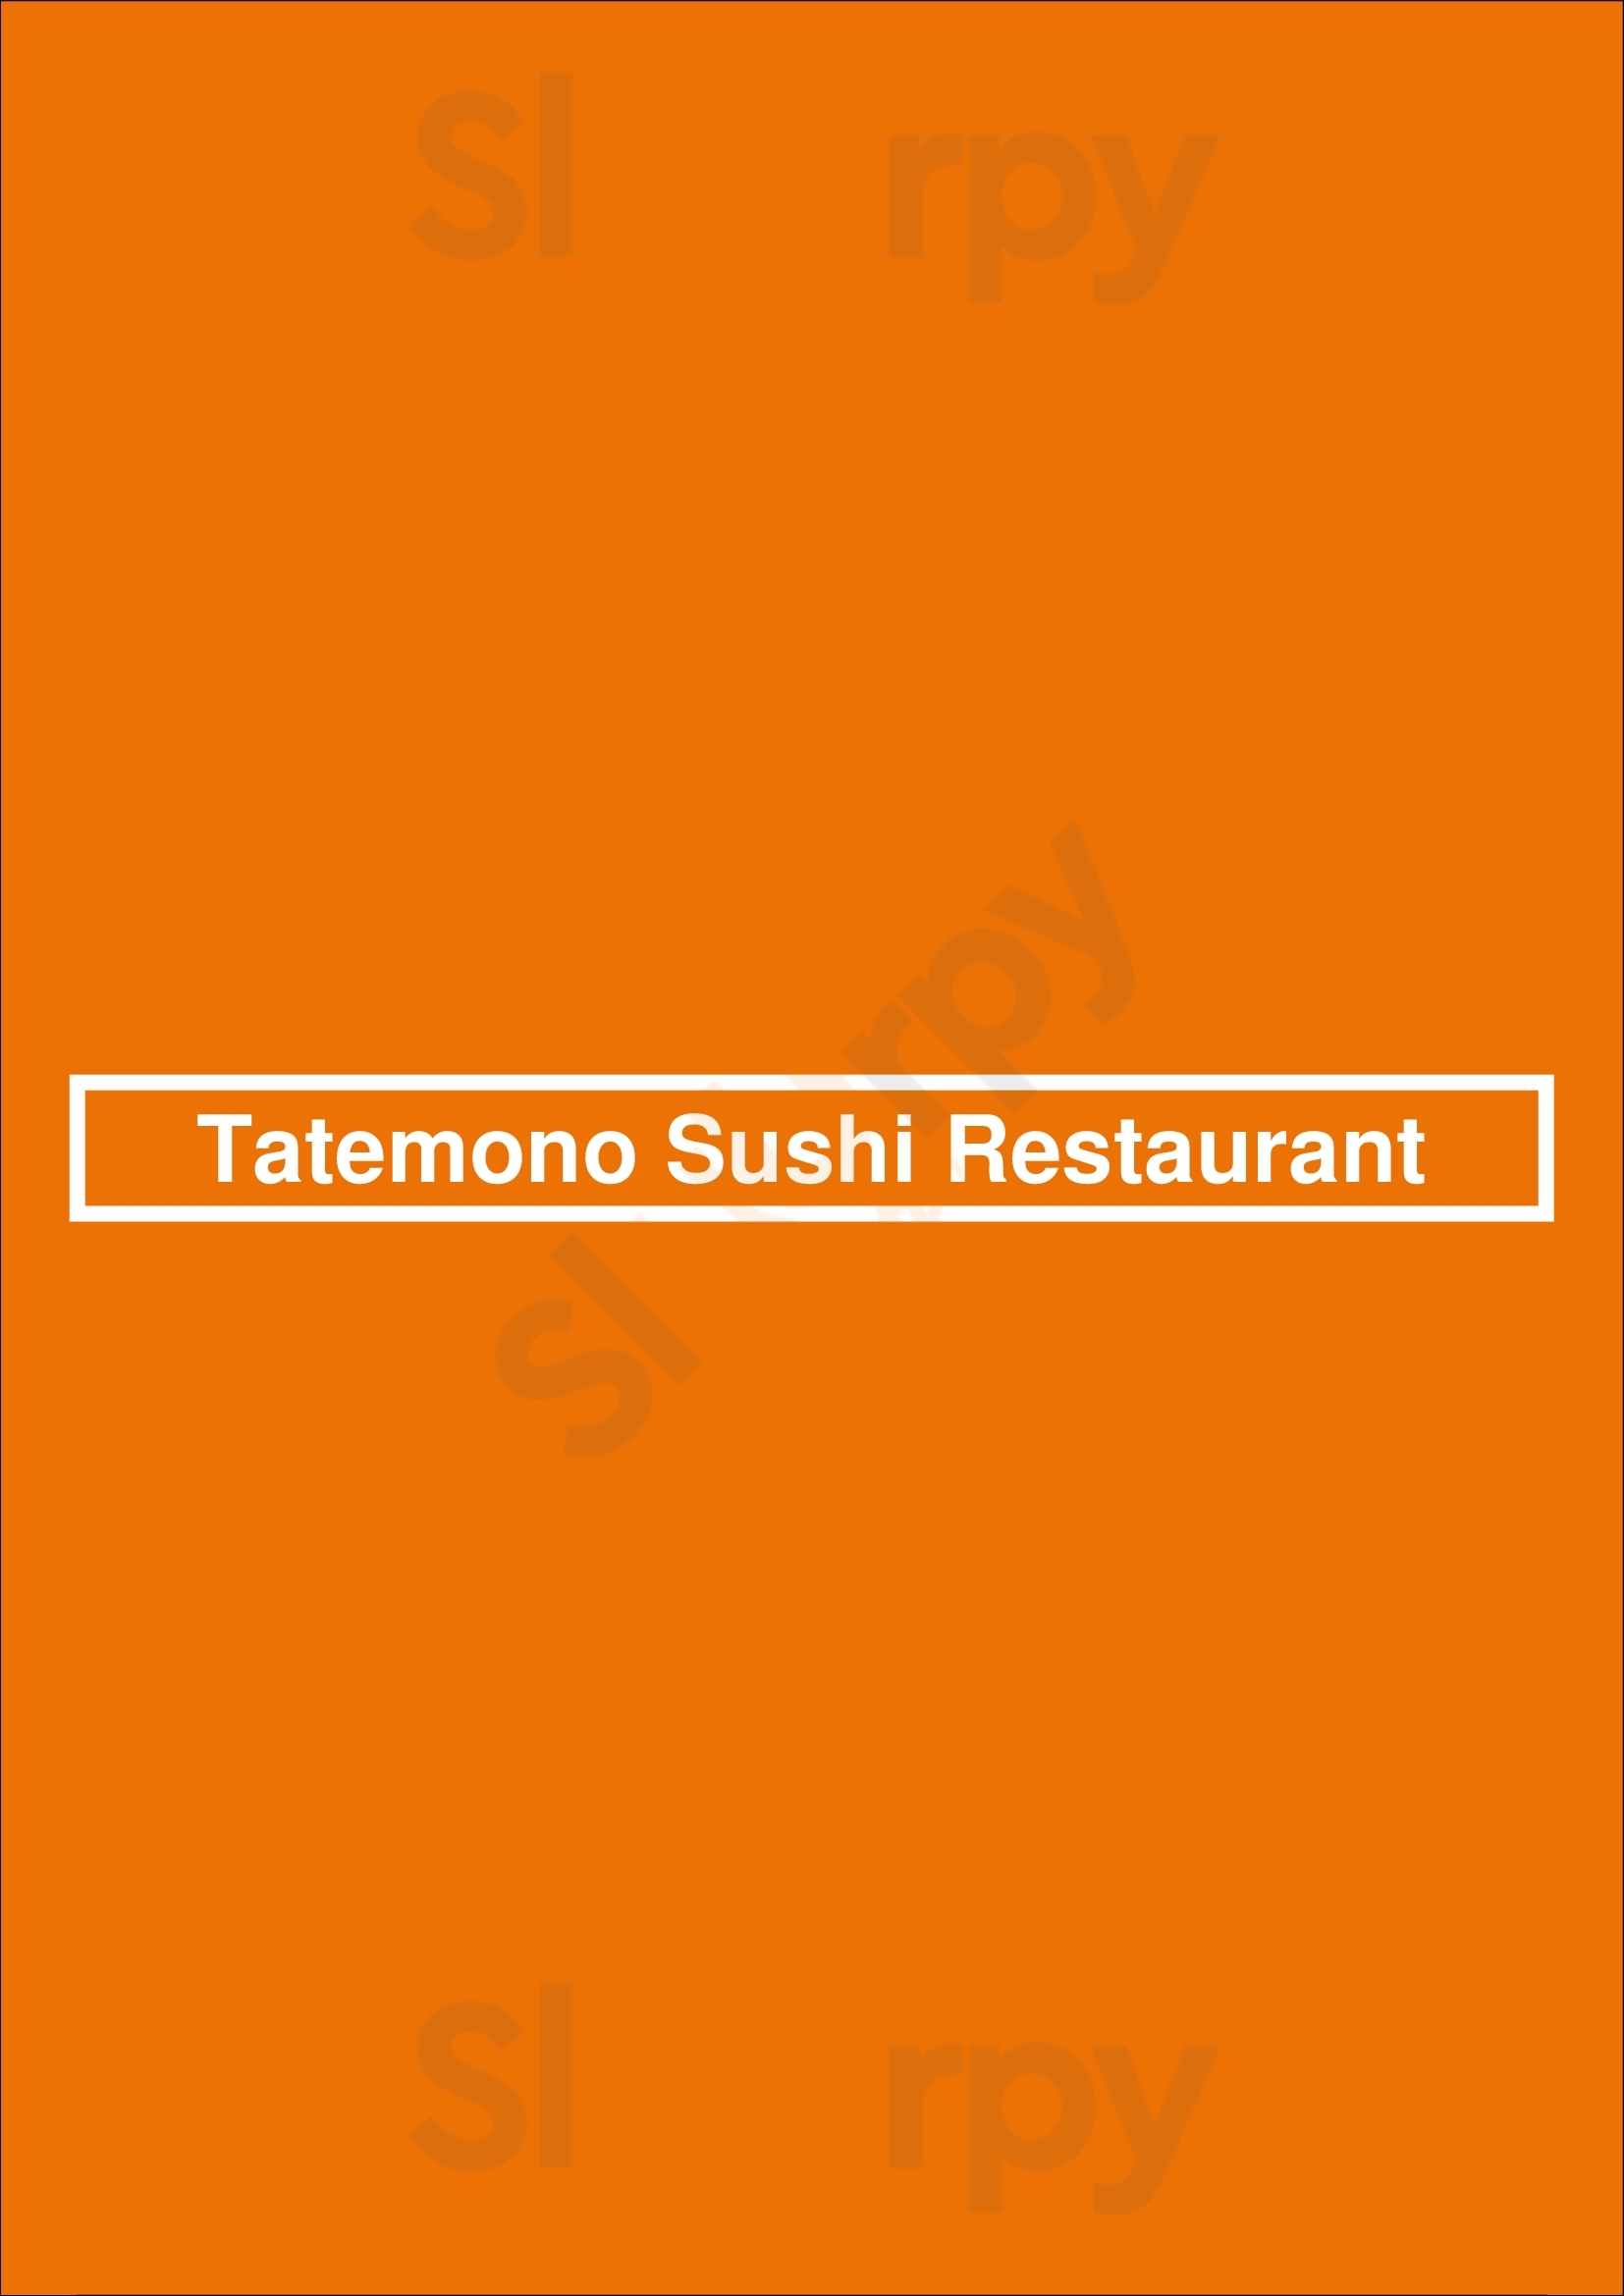 Tatemono Sushi Restaurant Whitby Menu - 1